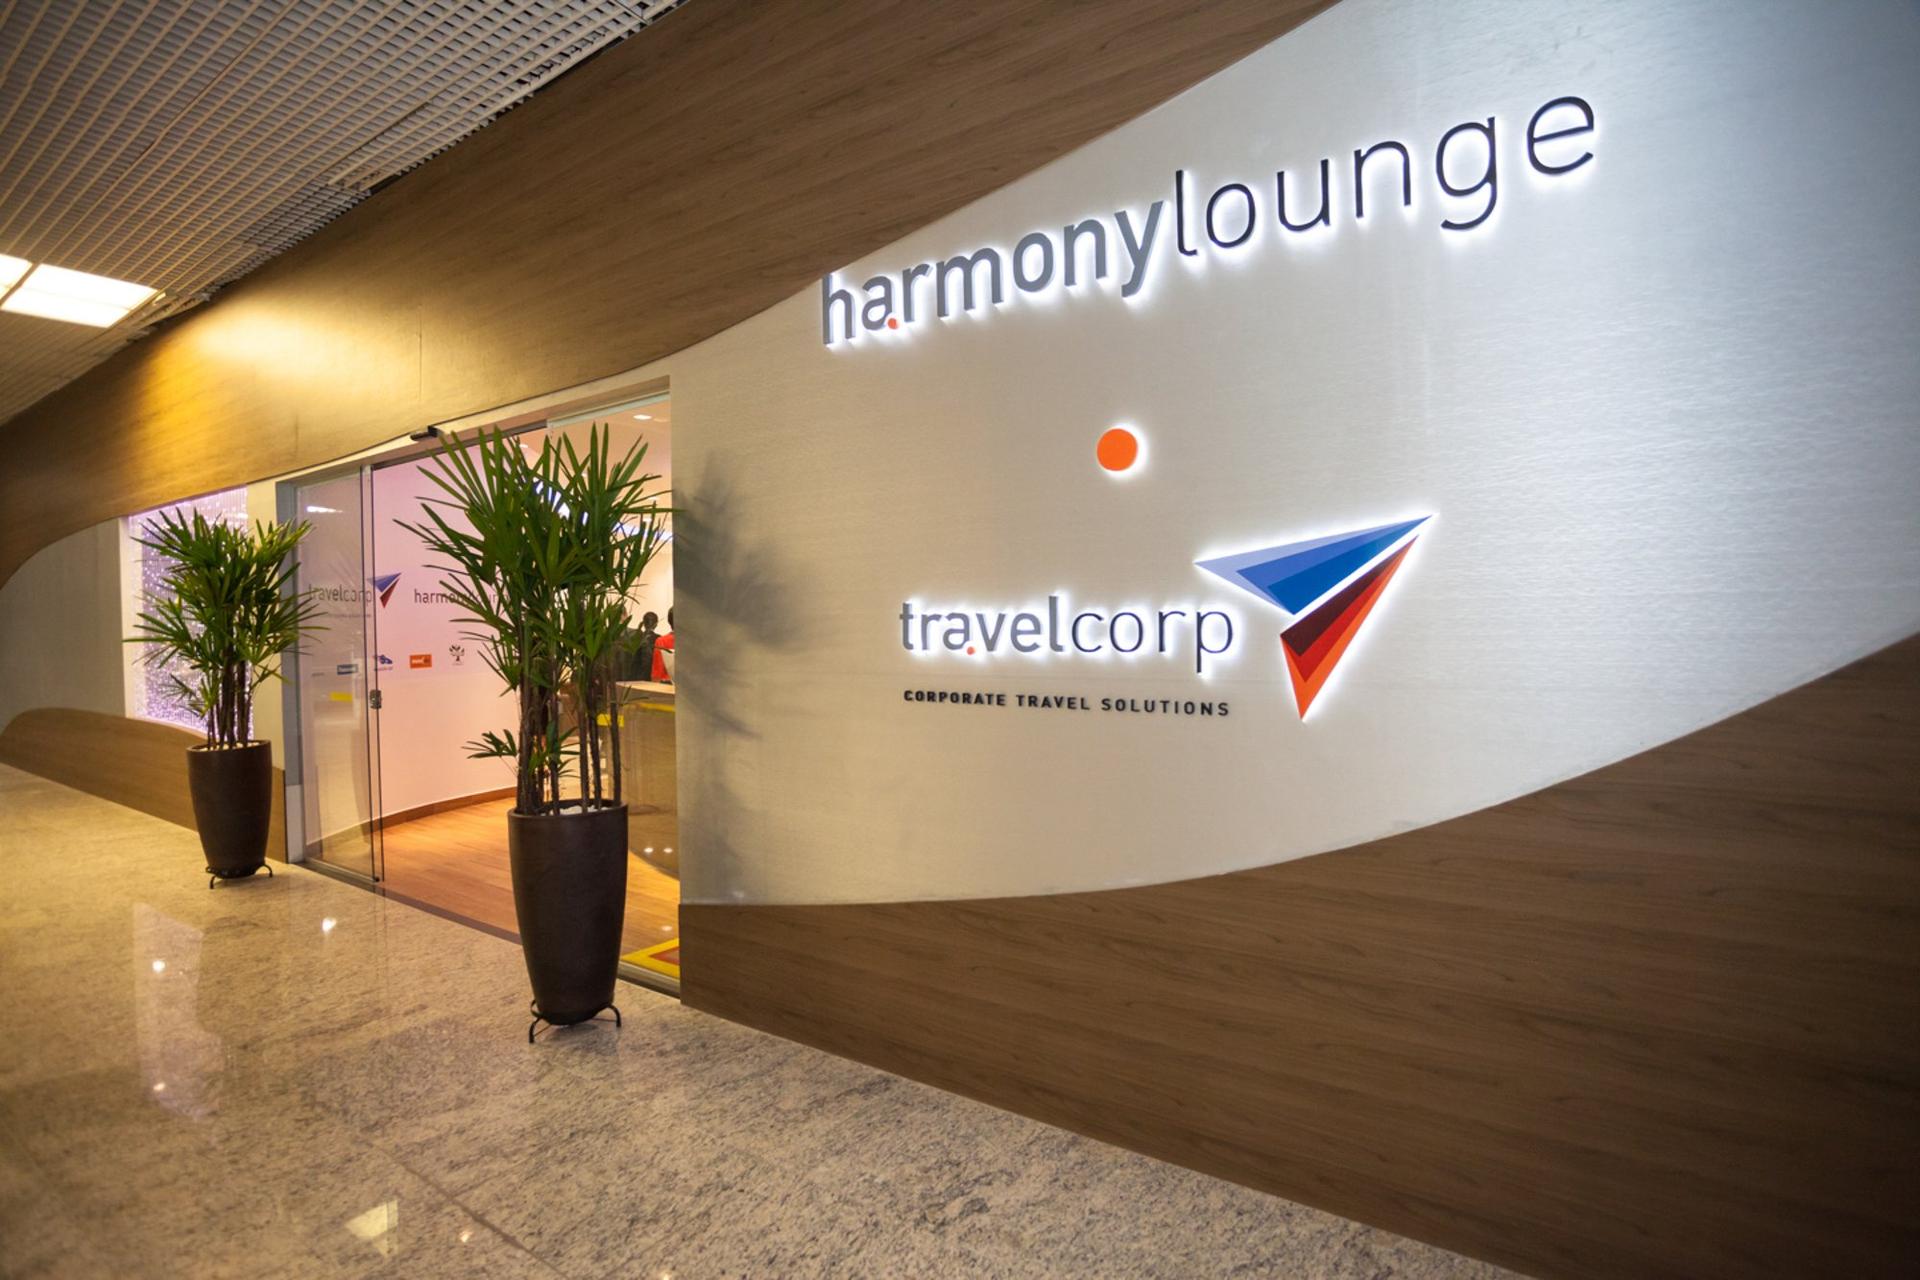 TravelCorp Harmony Lounge image 14 of 25